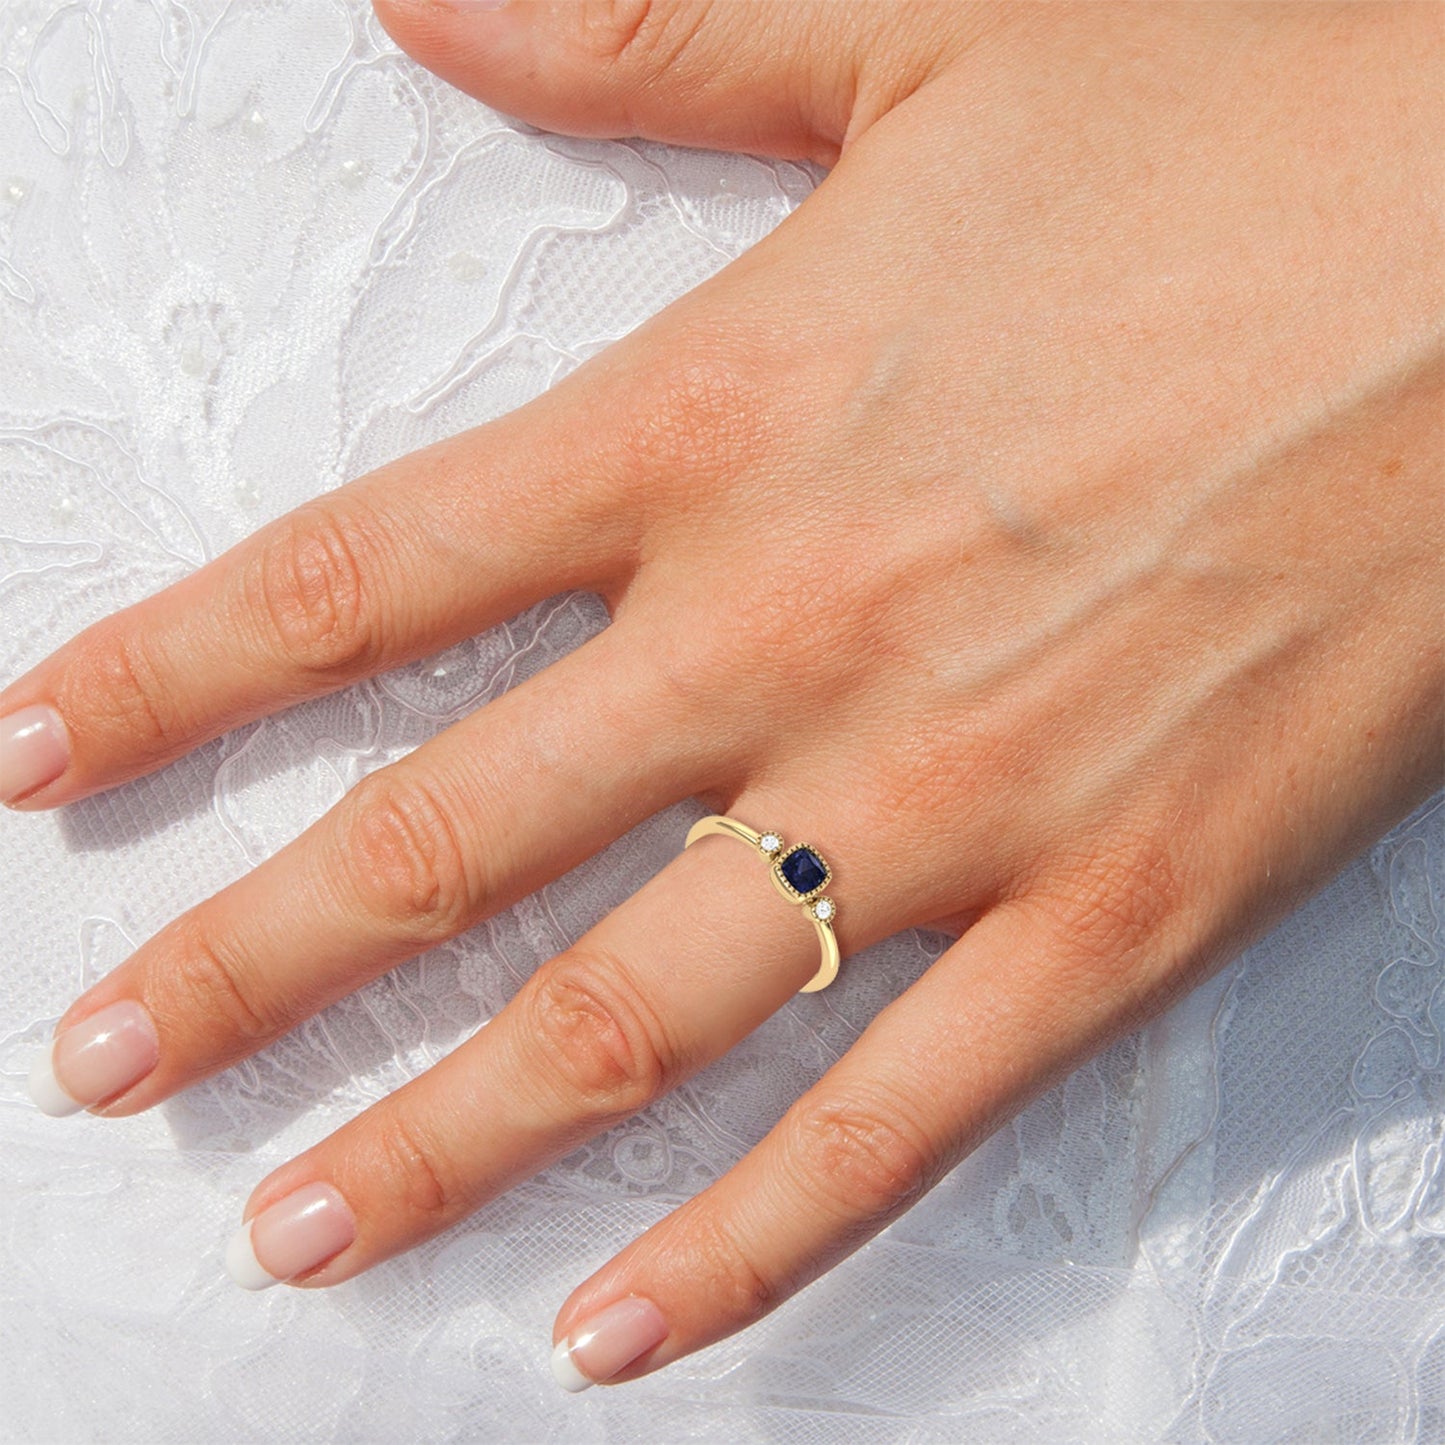 Cushion Cut Sapphire & Diamond Birthstone Ring In 14K Yellow Gold by LuvMyJewelry